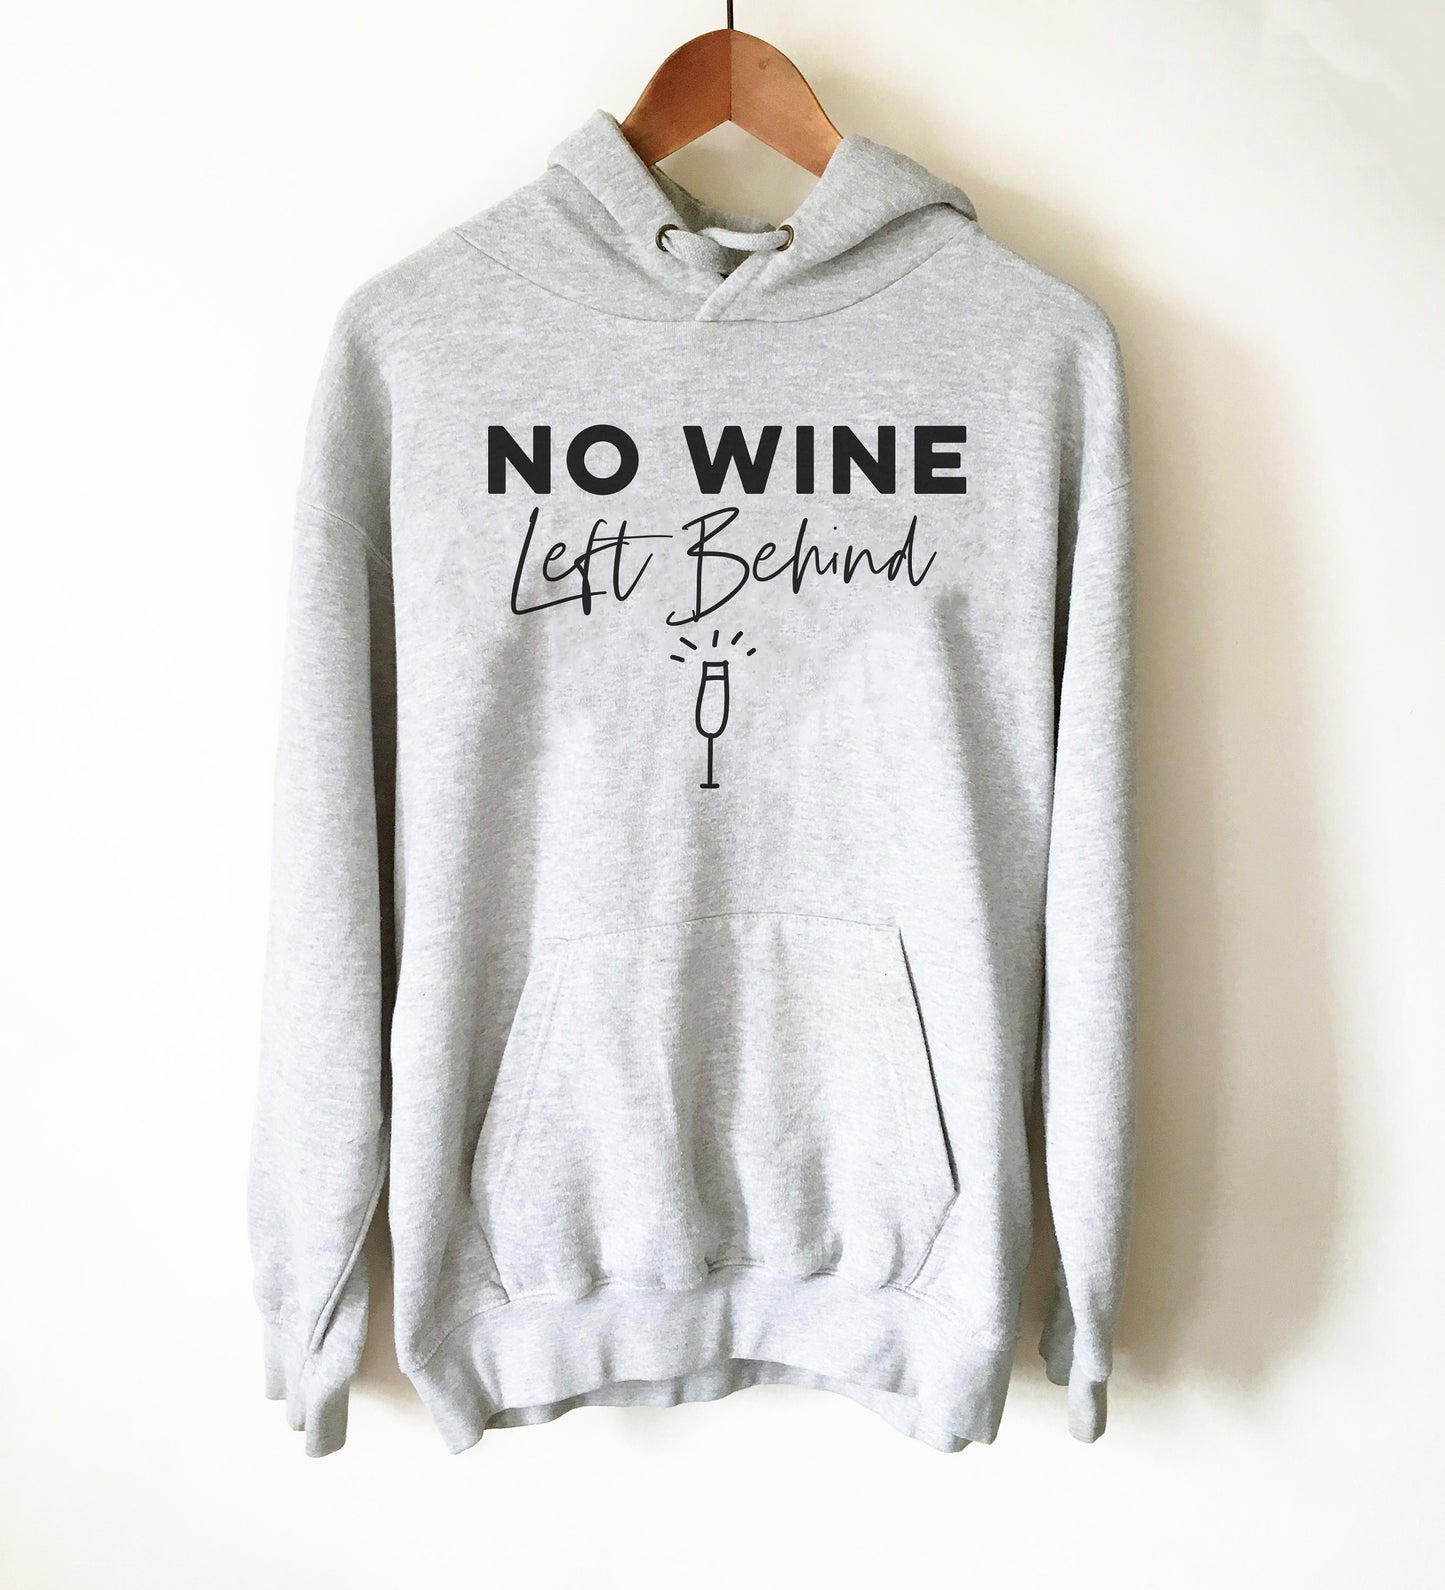 No Wine Left Behind Hoodie - Wine Shirt, Wine Gift, Wine Tasting Shirt, Wine Tasting Gift, Sommelier Gift, Bachelorette Party Shirt